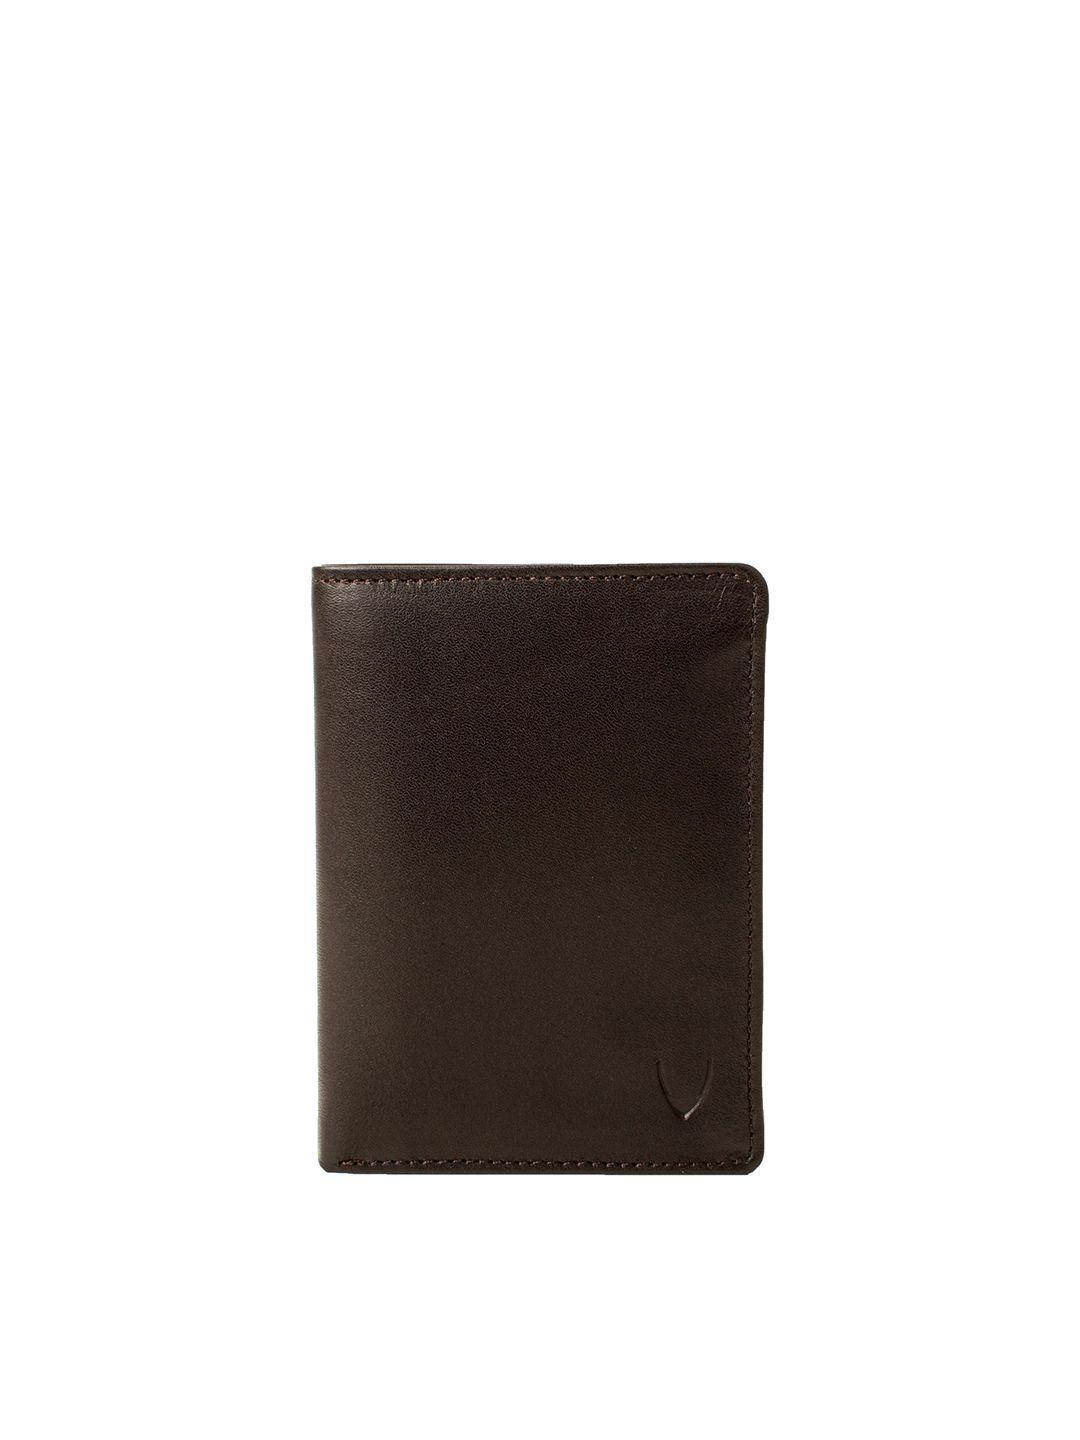 hidesign men brown leather three fold wallet